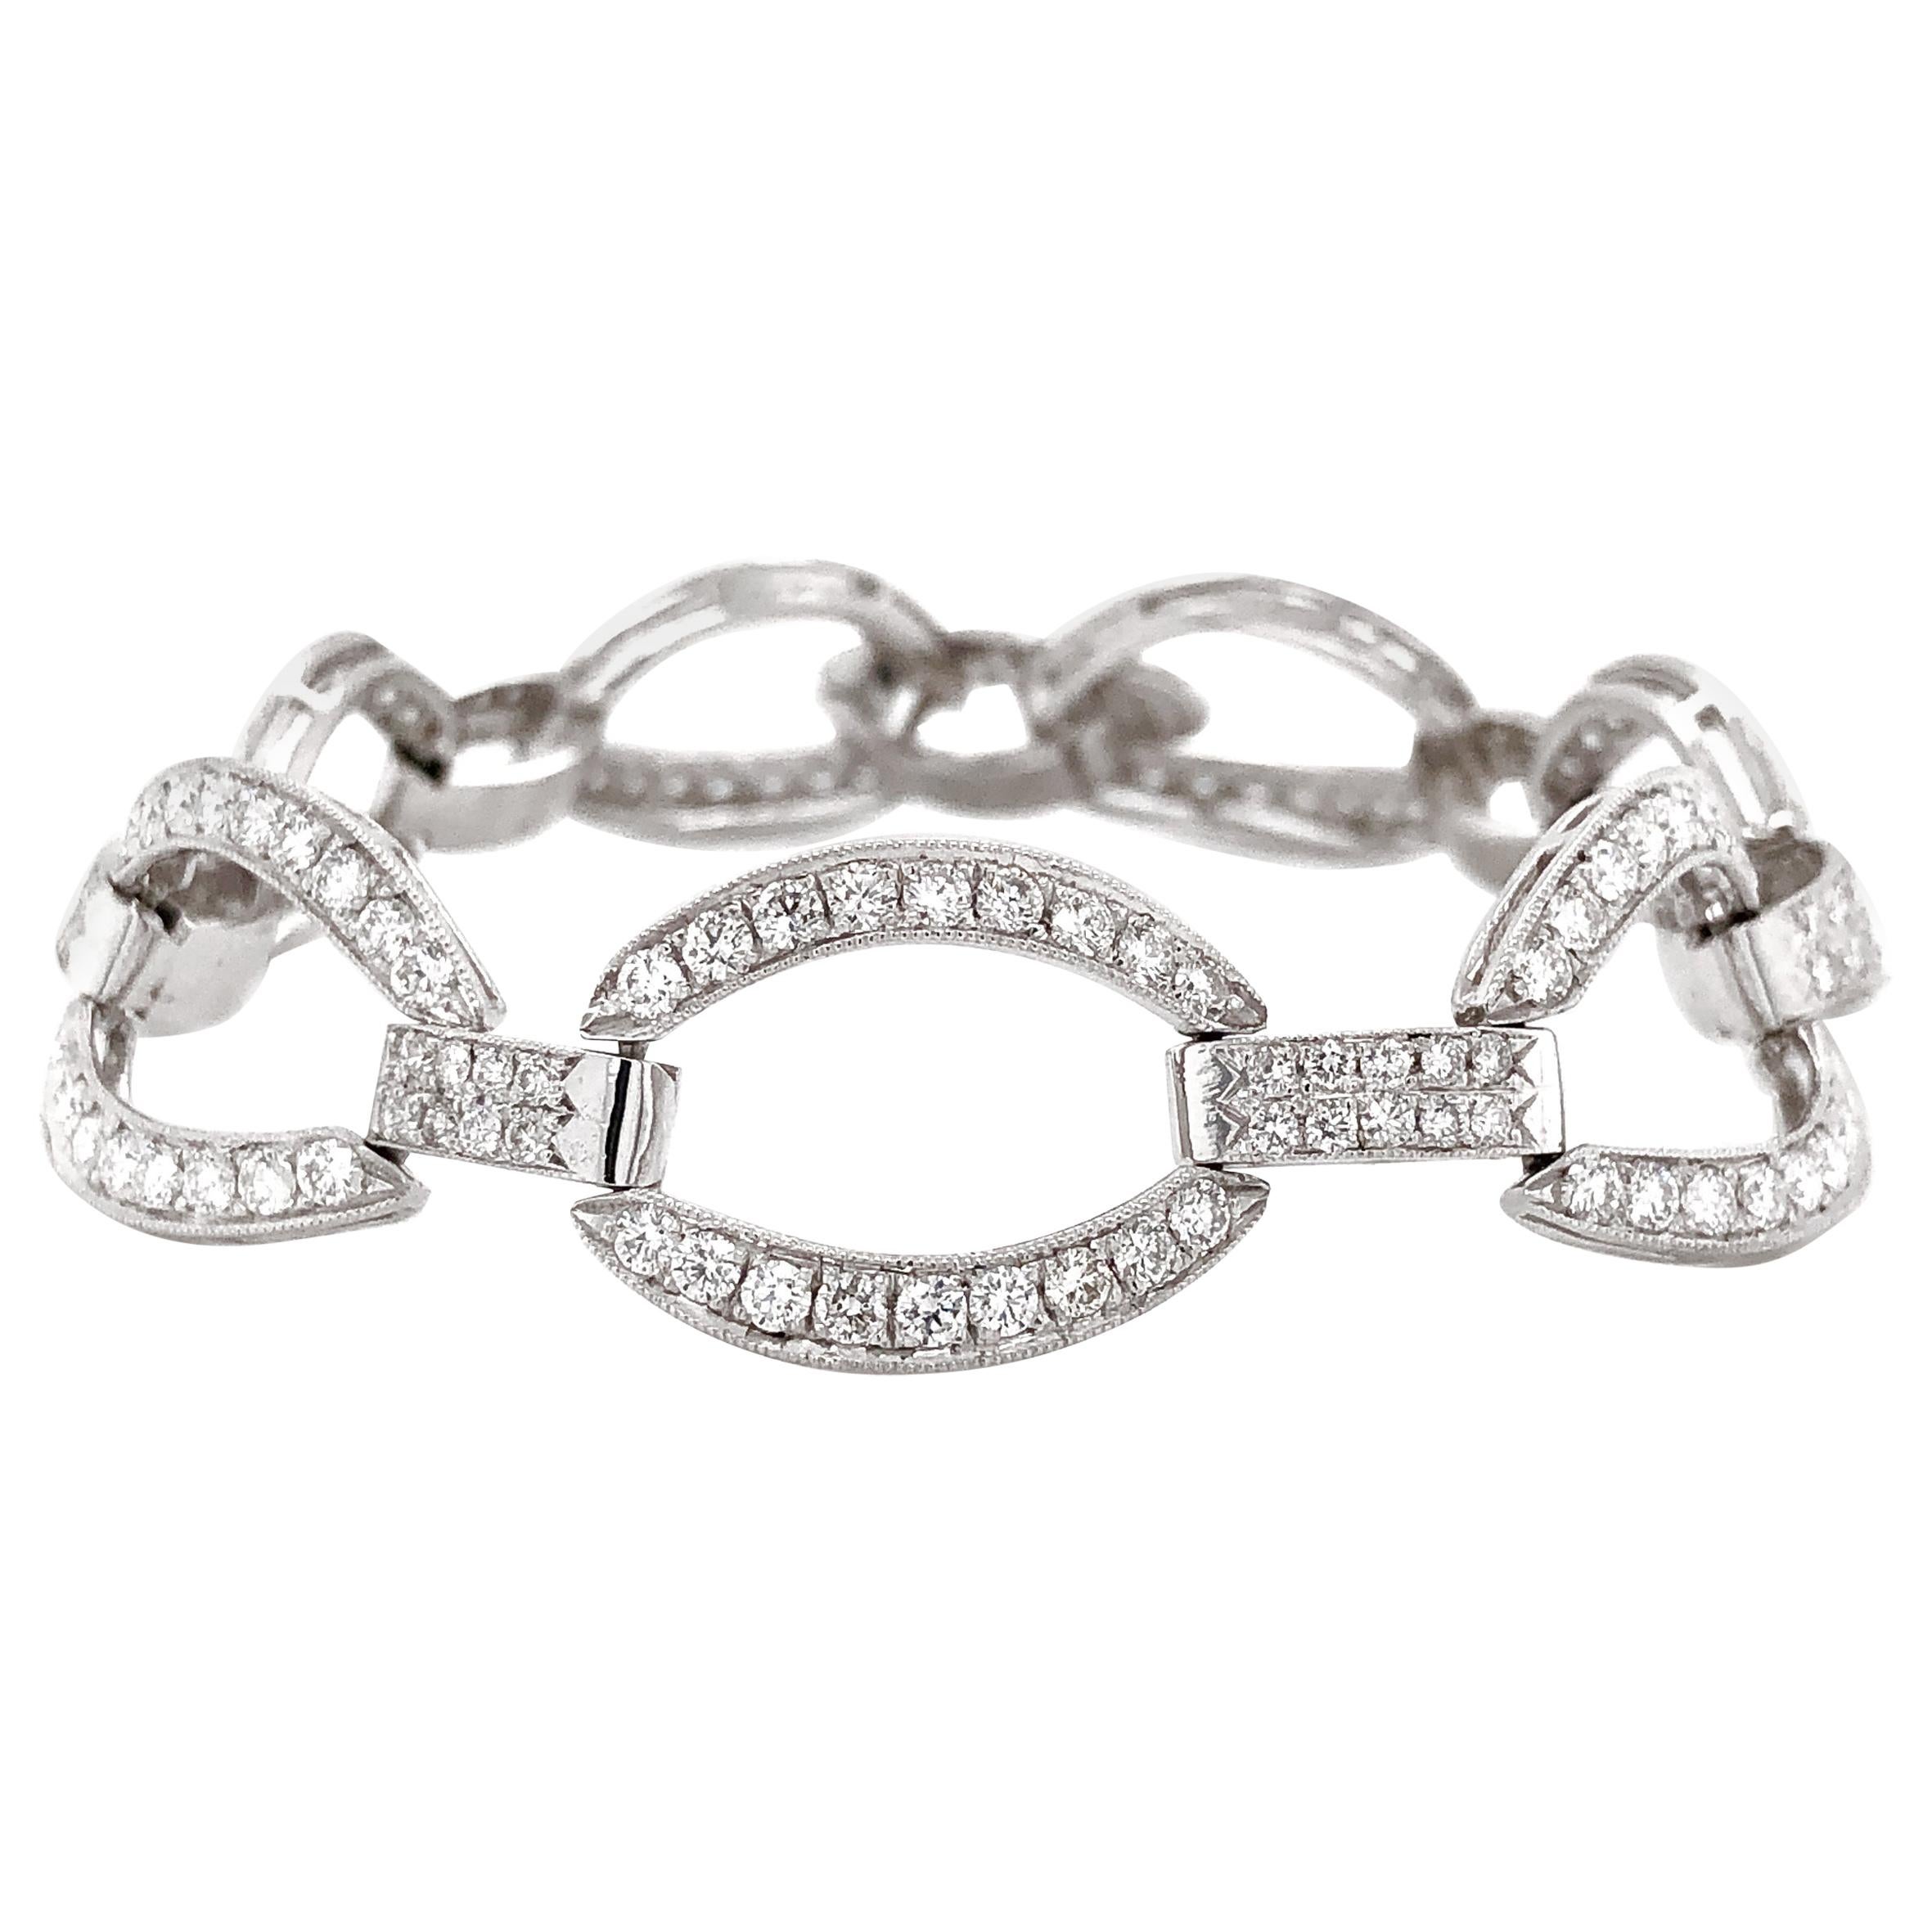 Art Deco Inspired Round Cut Diamonds 6.21 Carat Platinum Chain Bracelet For Sale